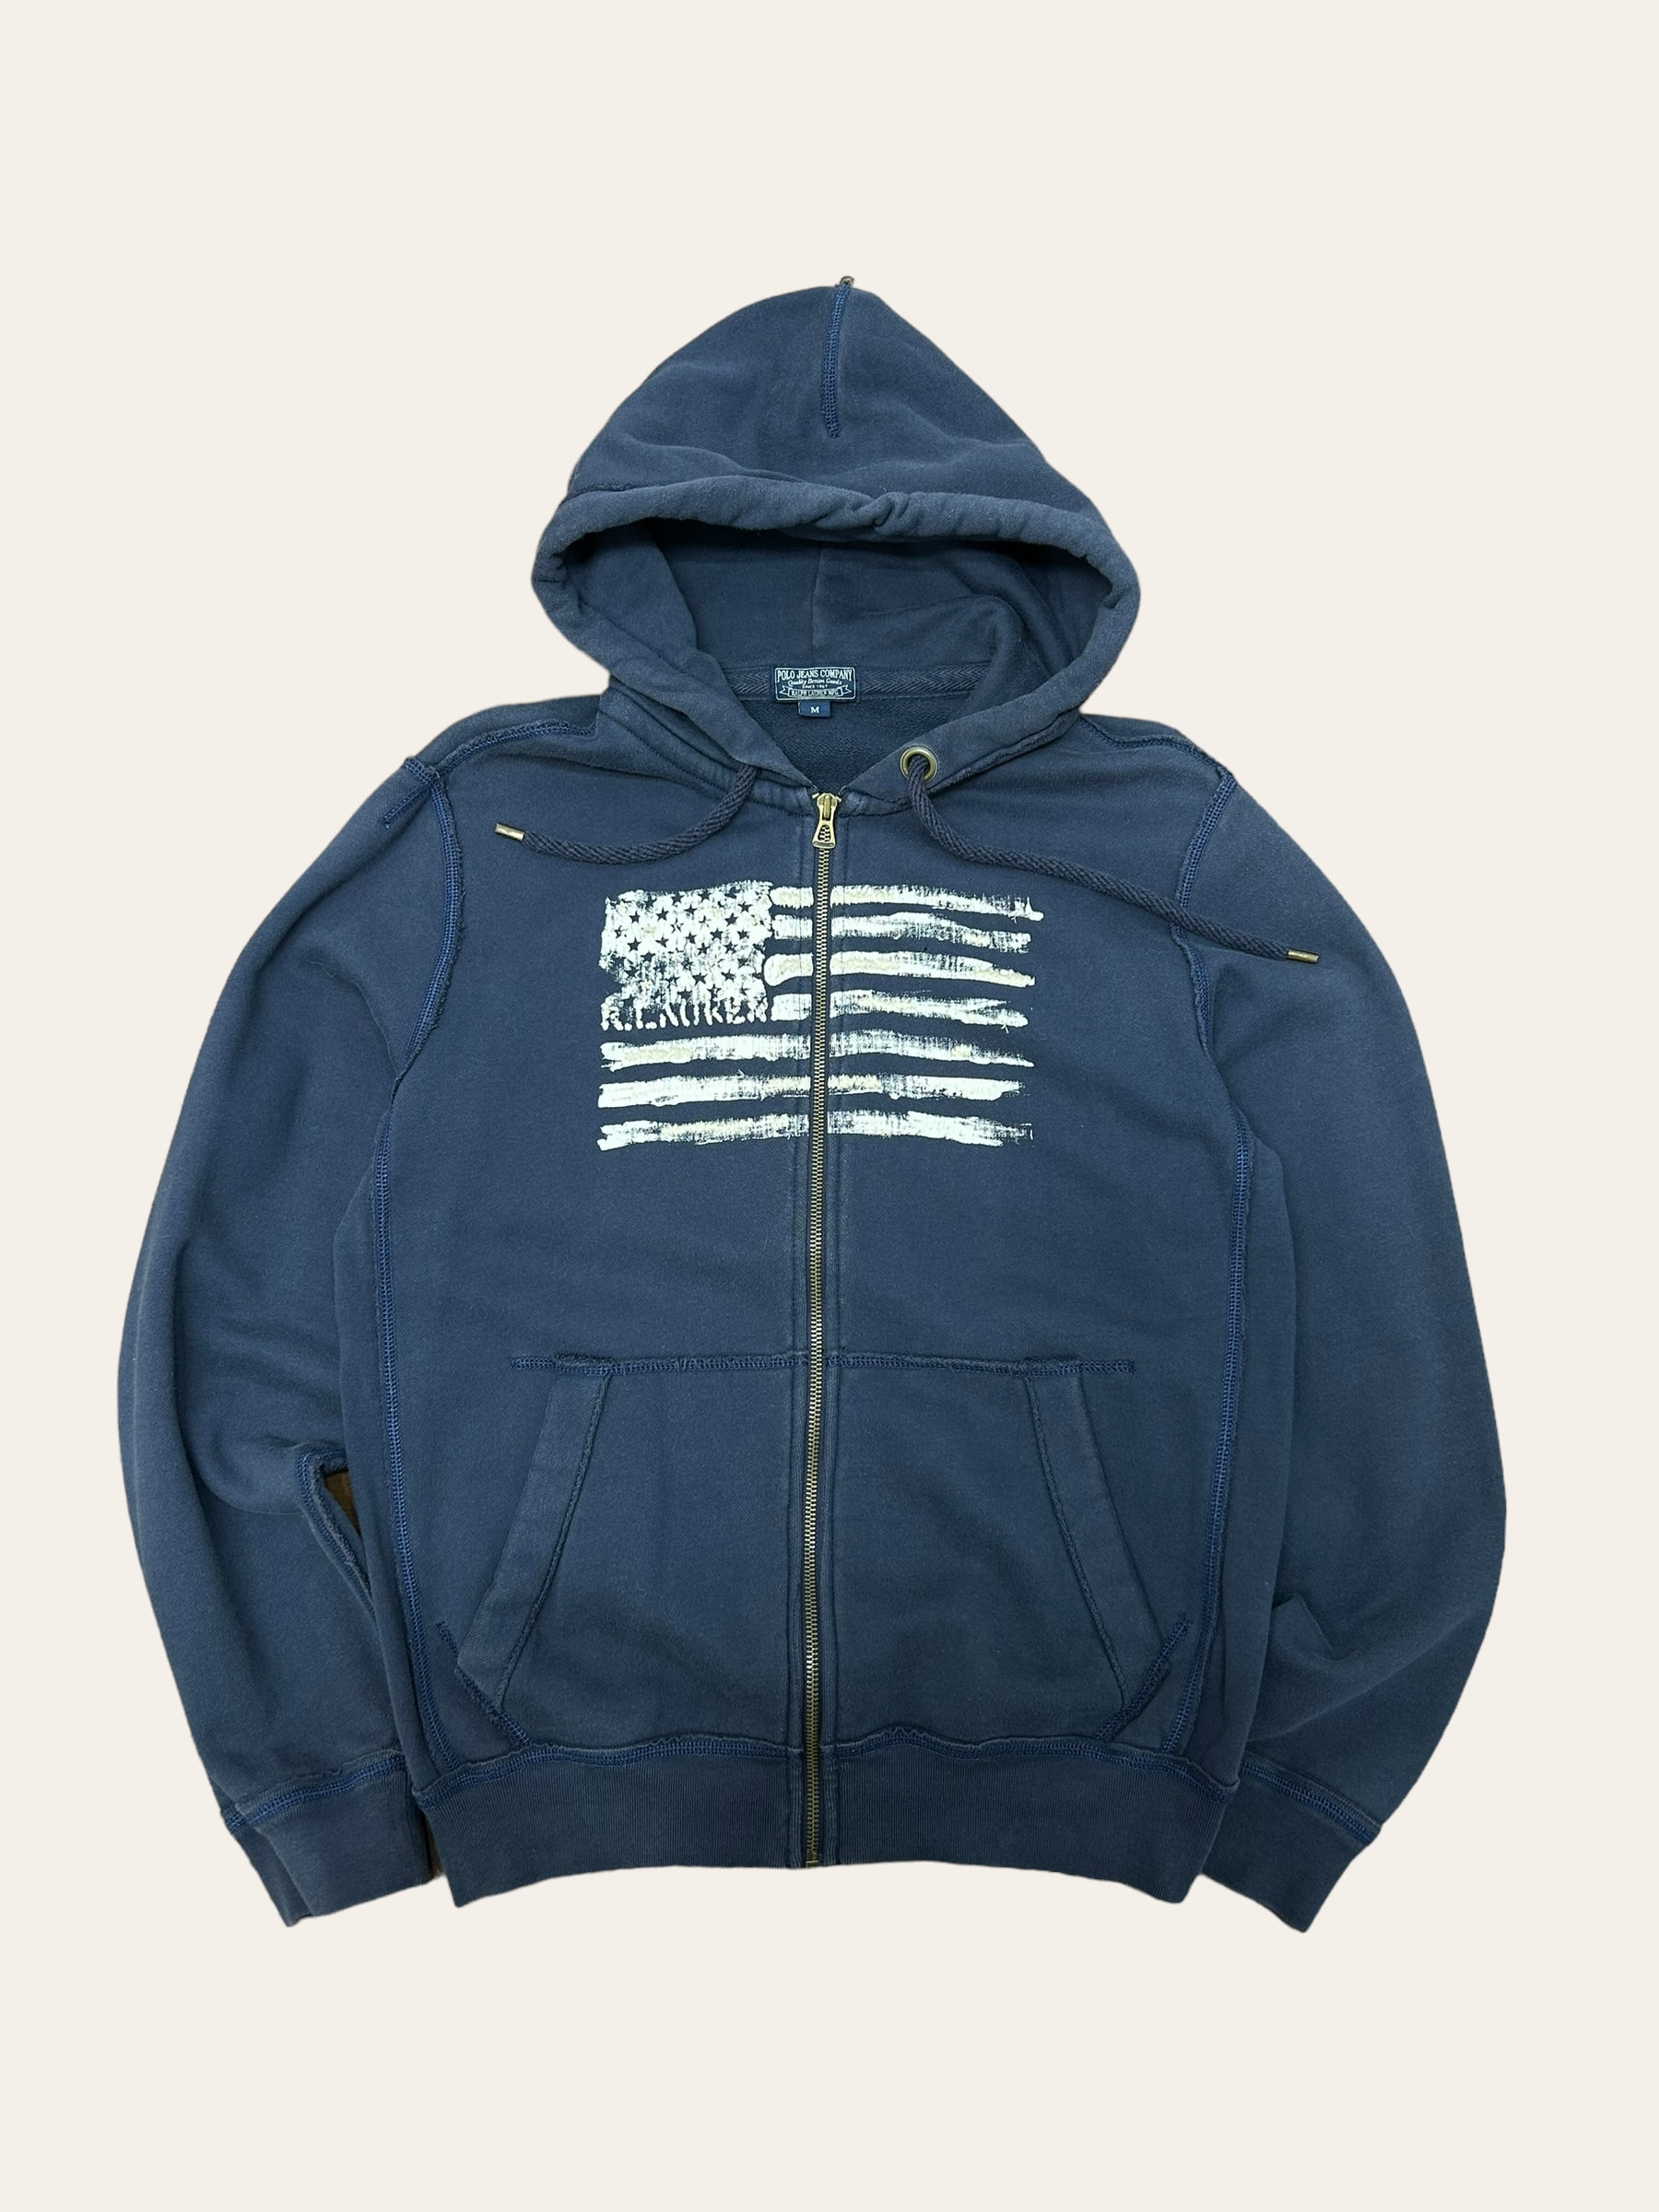 Polo jeans company navy USA flag printing hoodie jacket M